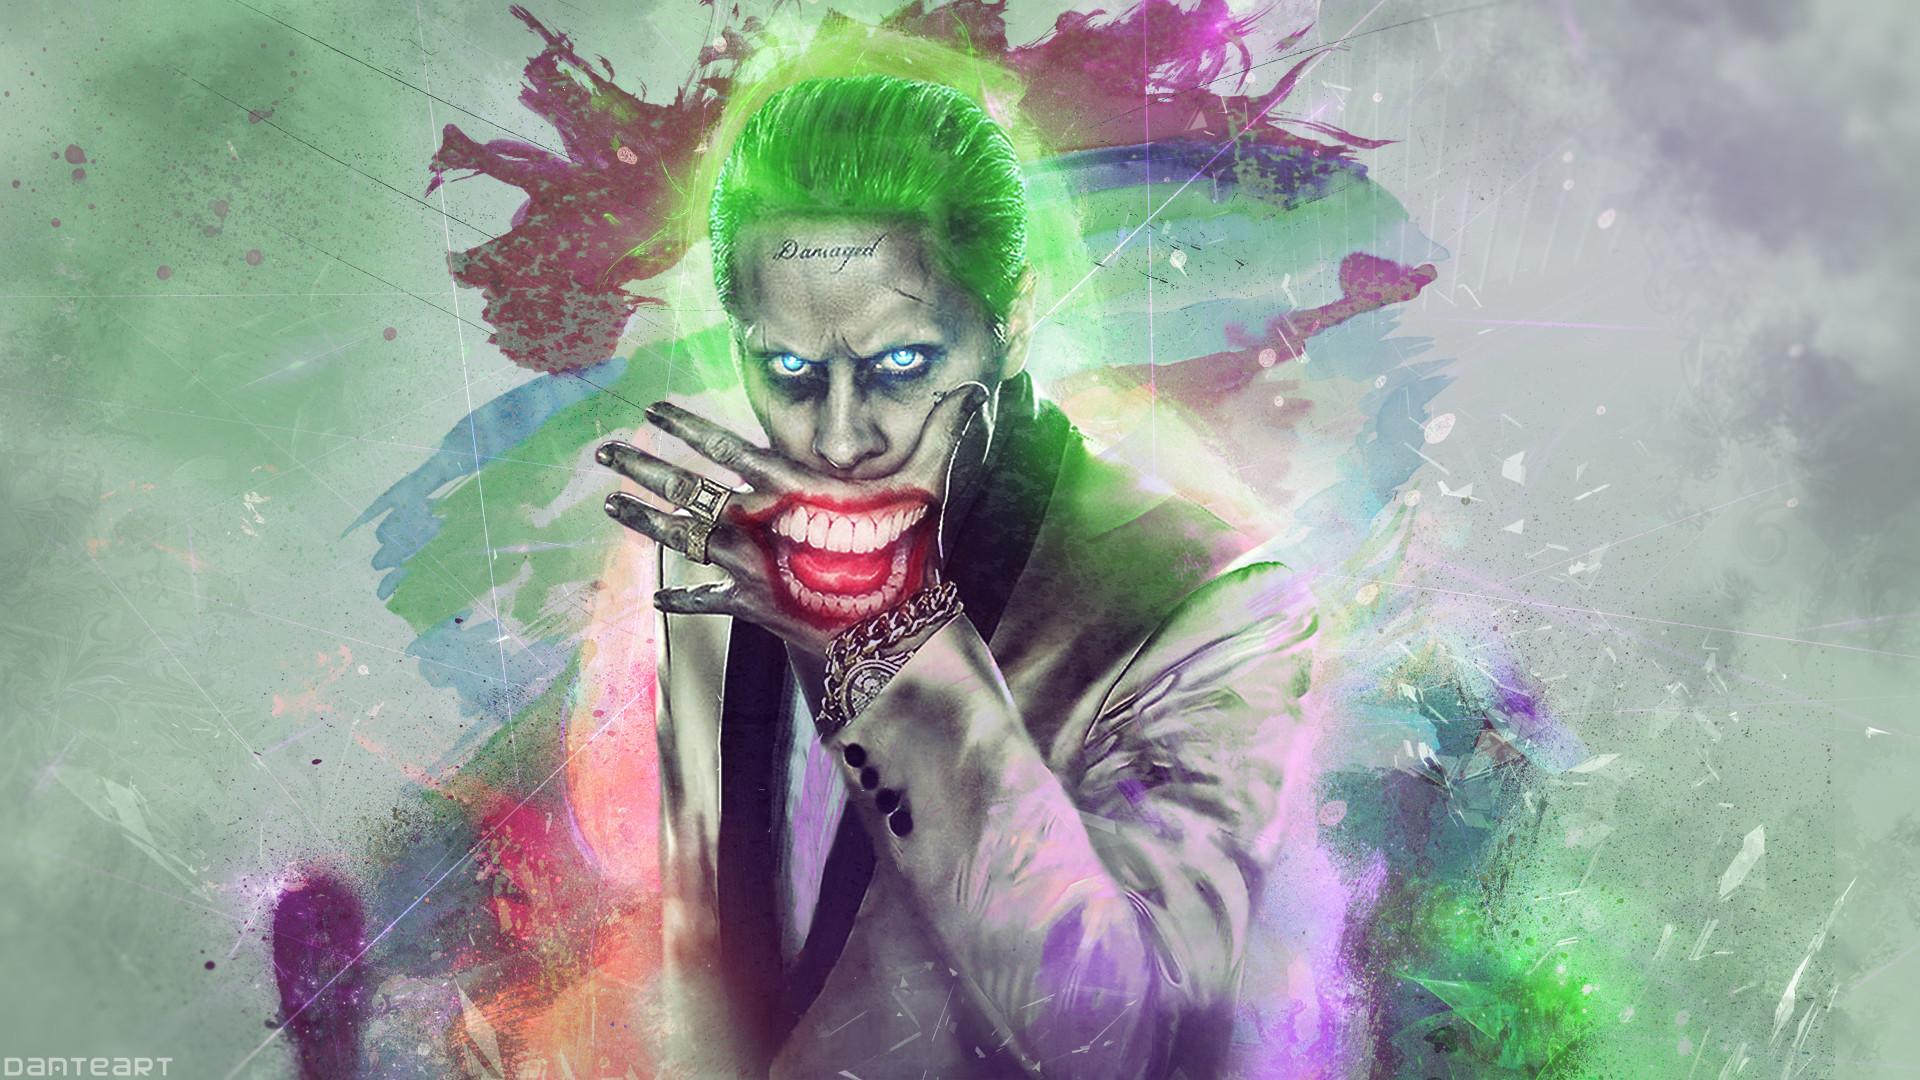 Joker Cool Wallpapers - Wallpaper Cave